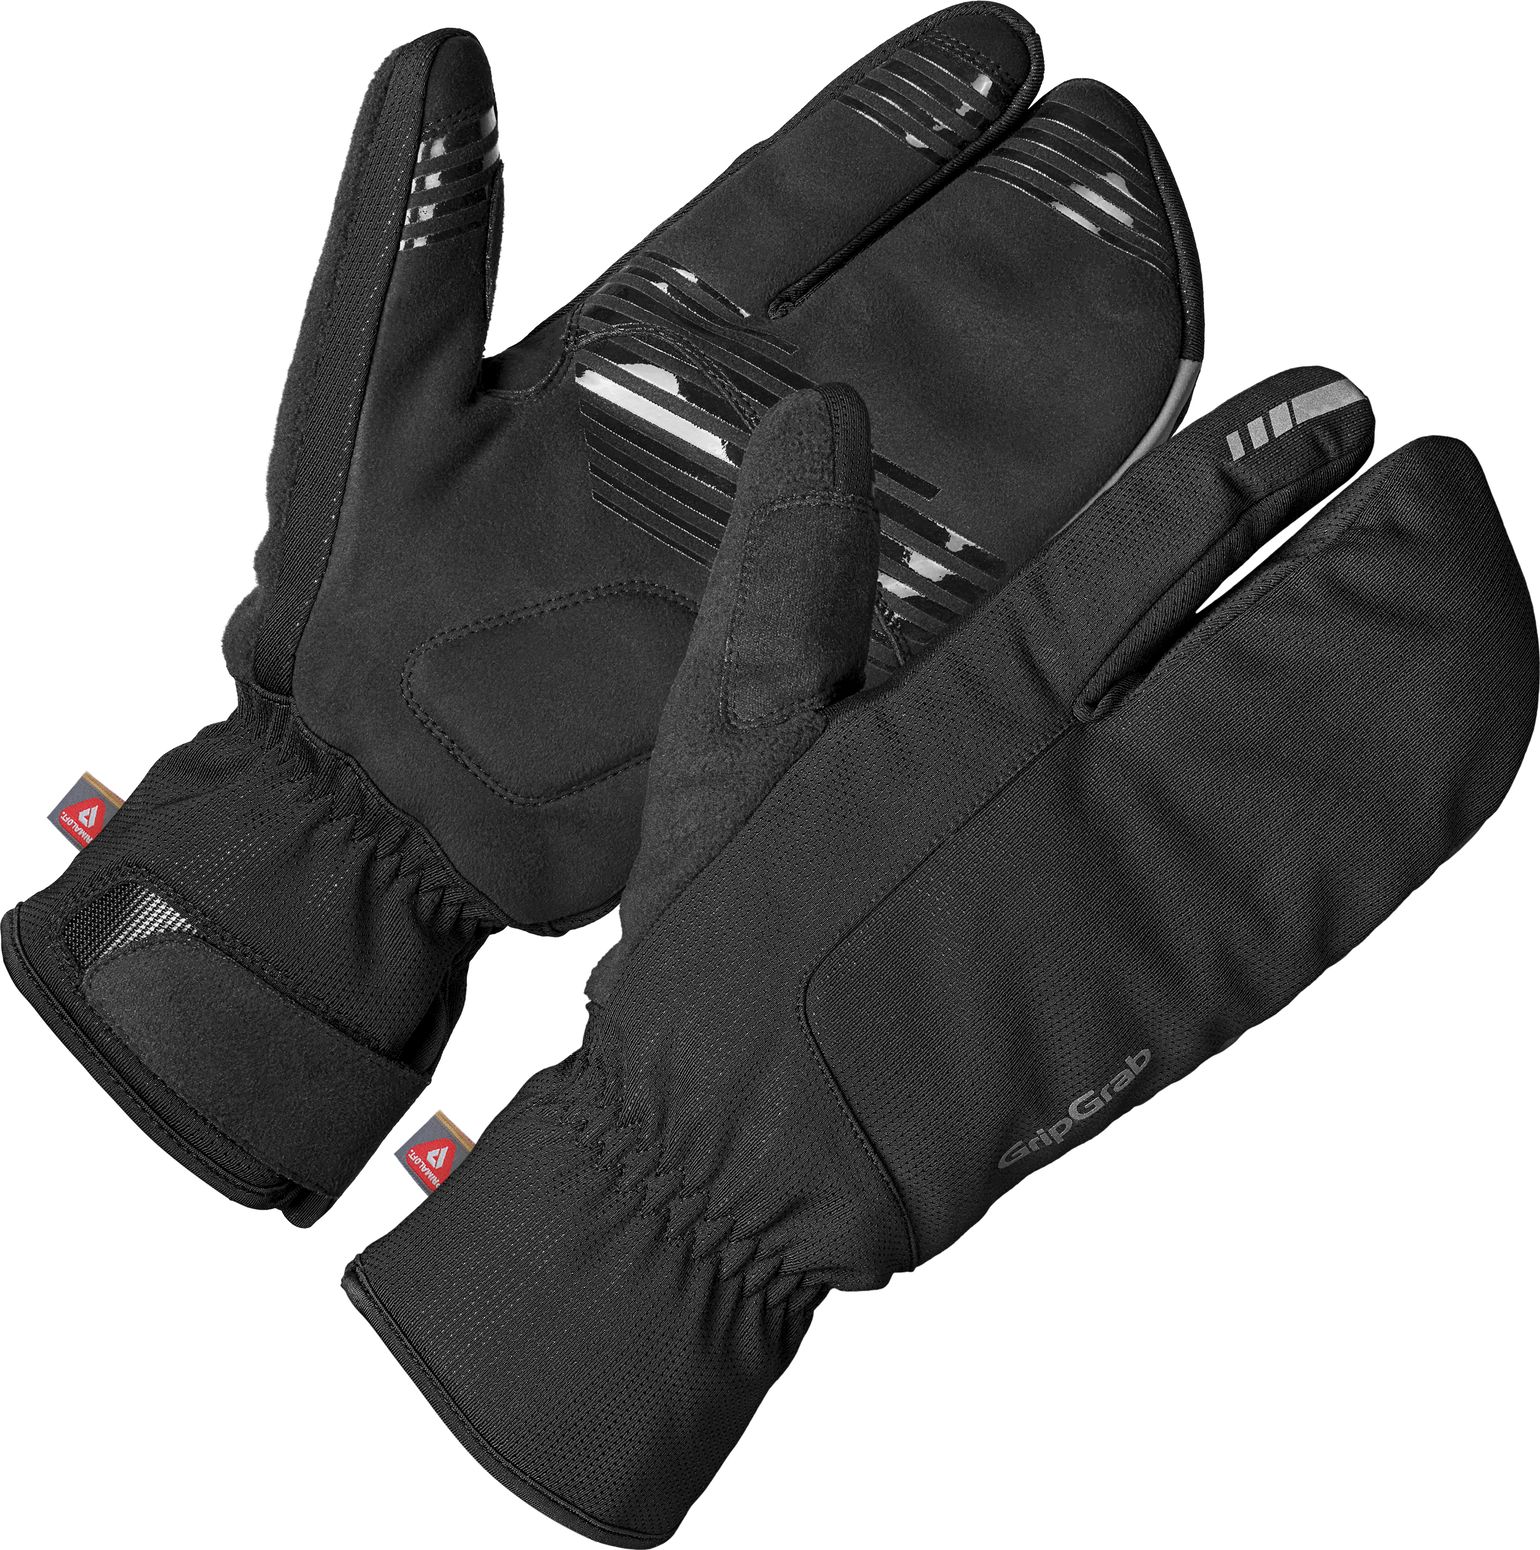 Nordic 2 Windproof Deep Winter Lobster Gloves Black